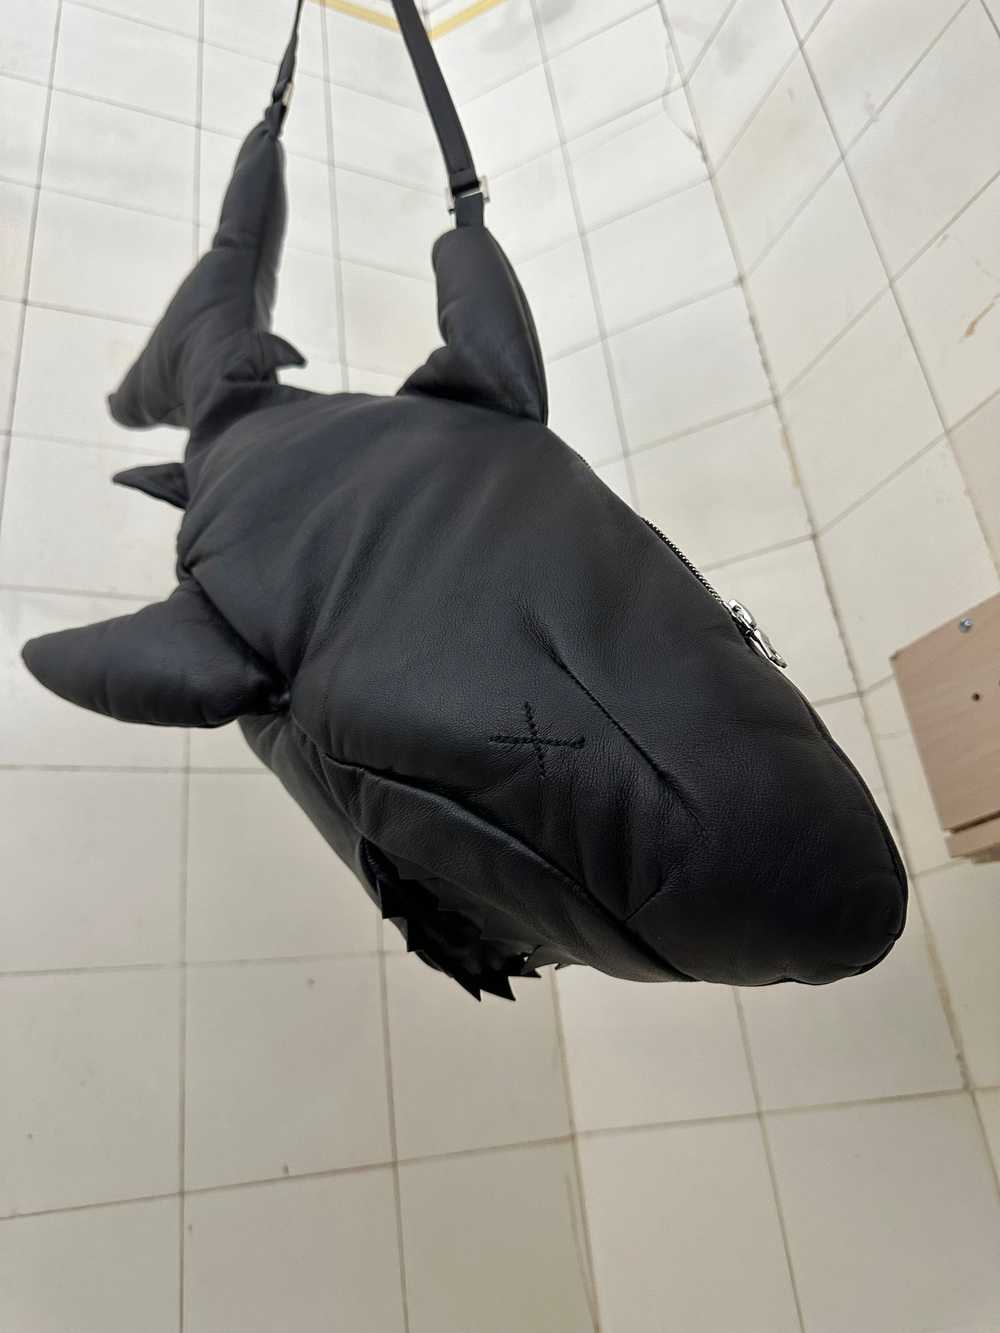 aw2015 Raeburn Black Leather Shark Bag - Size OS - image 2